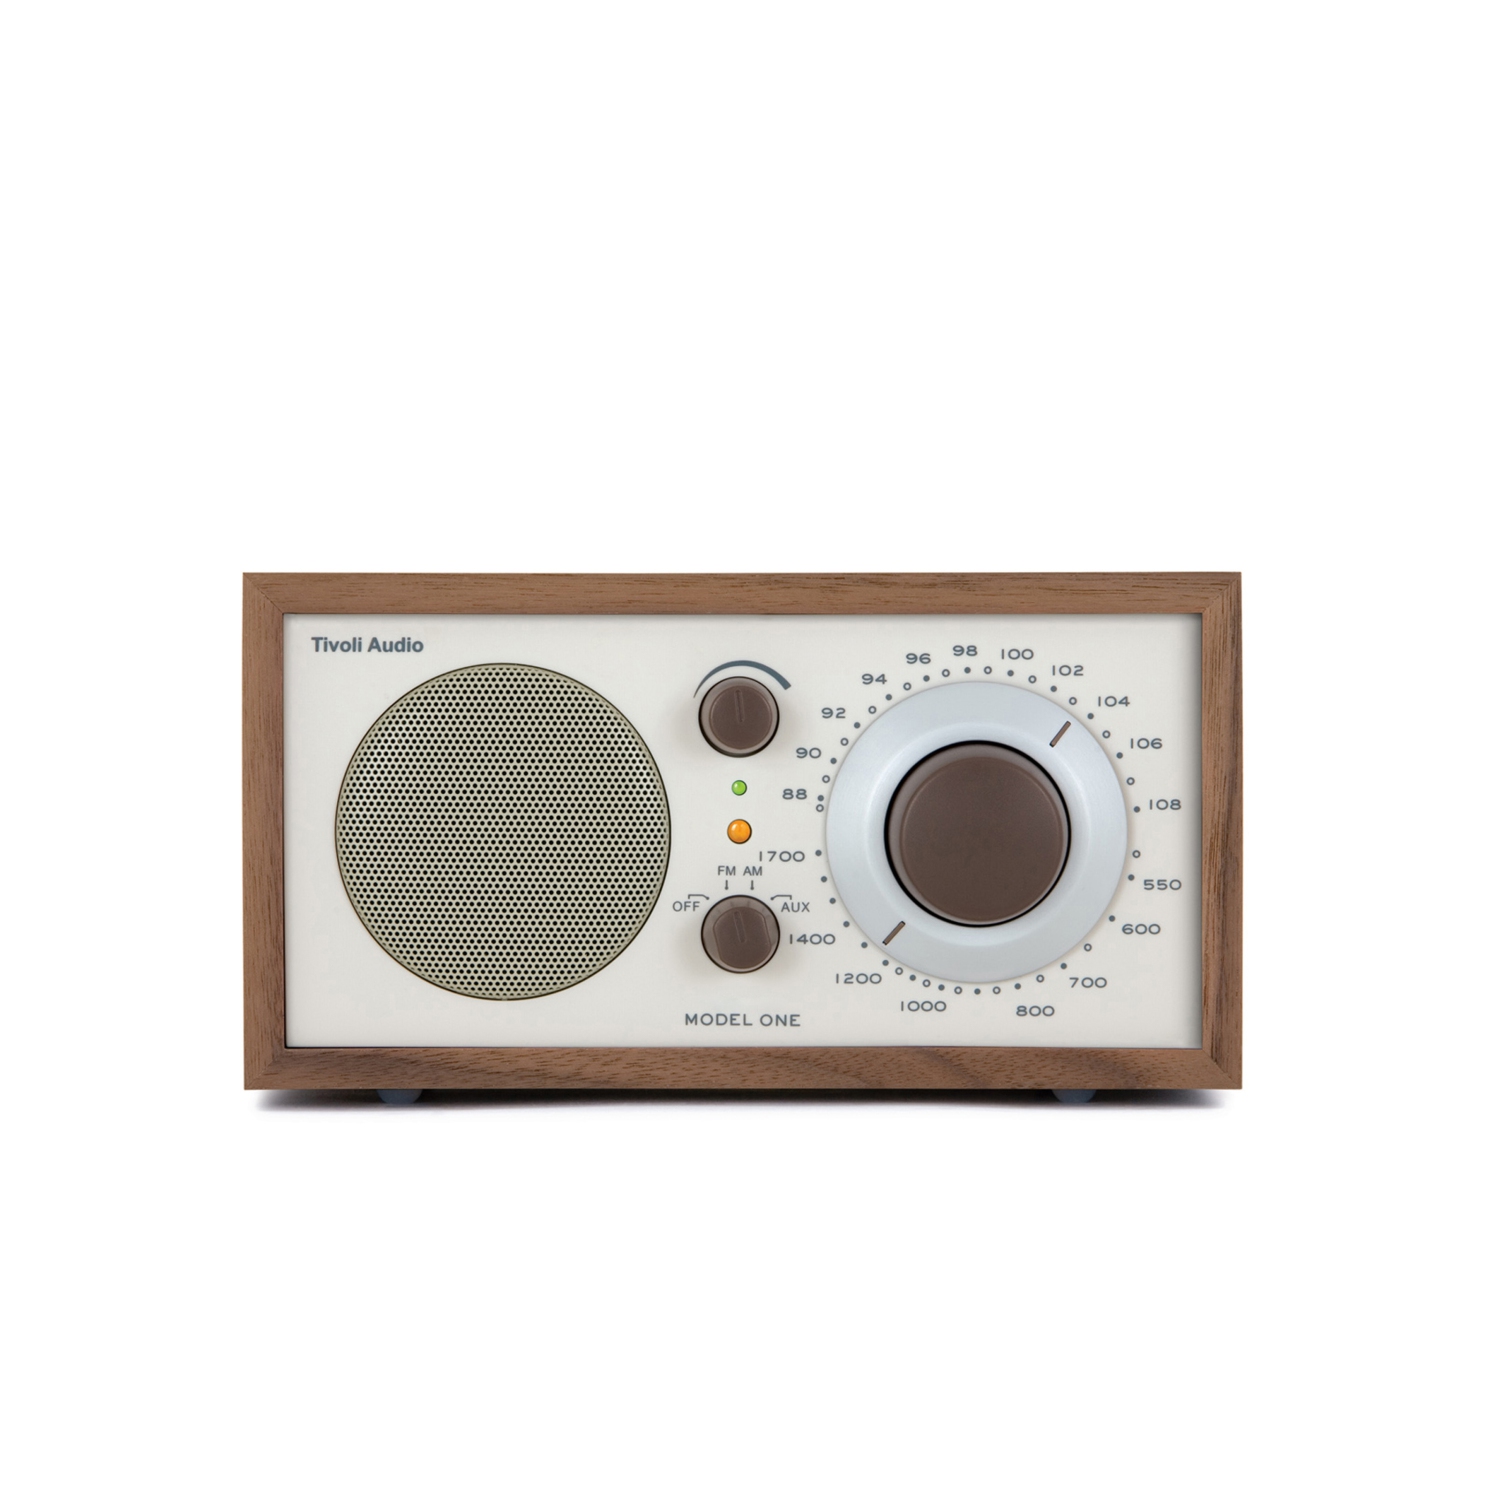 Tivoli Audio Model One AM/FM table radio - Classic (Walnut/Beige)